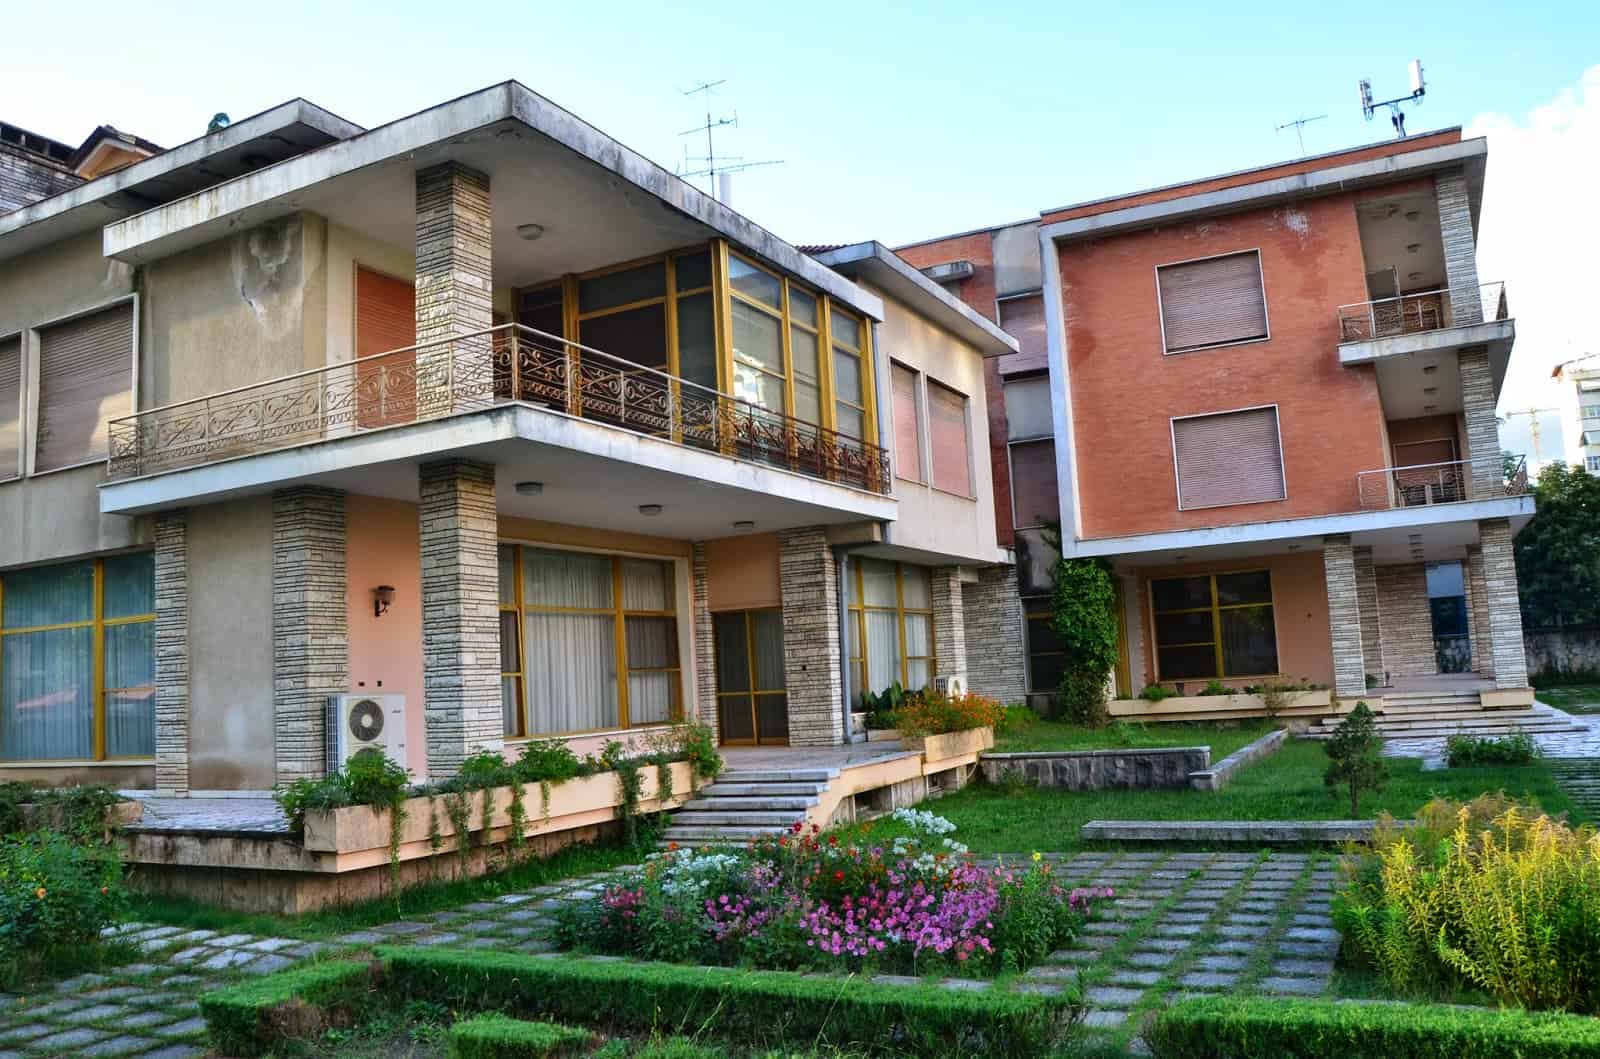 Enver Hoxha’s home in Tiranë, Albania